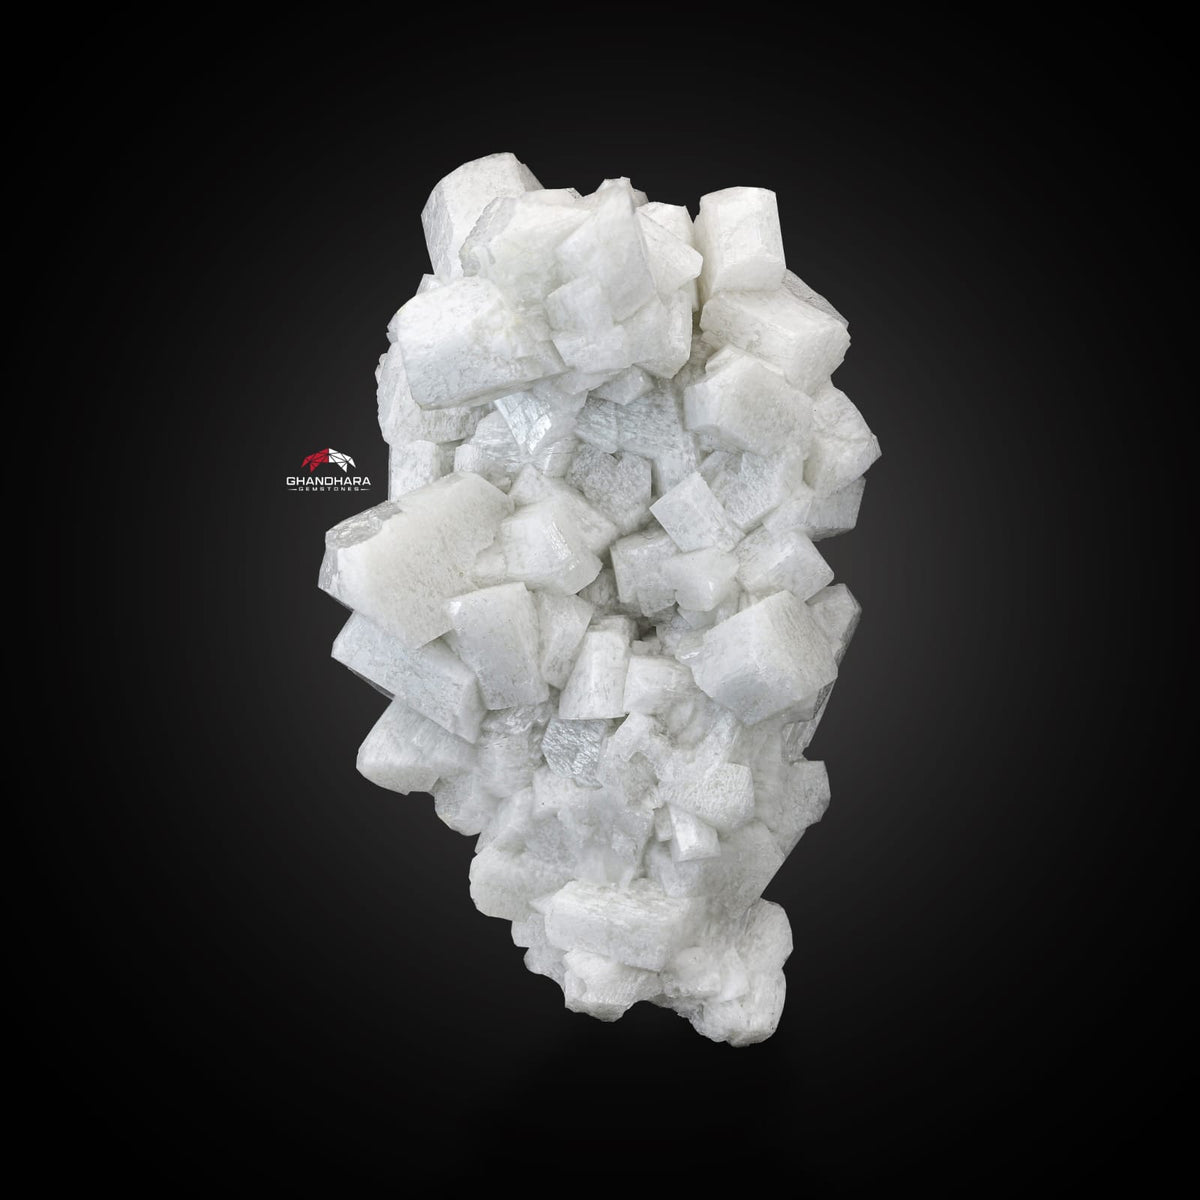 Milky White Aggregate Of Microcline Feldspar Crystals With Black Tourmaline